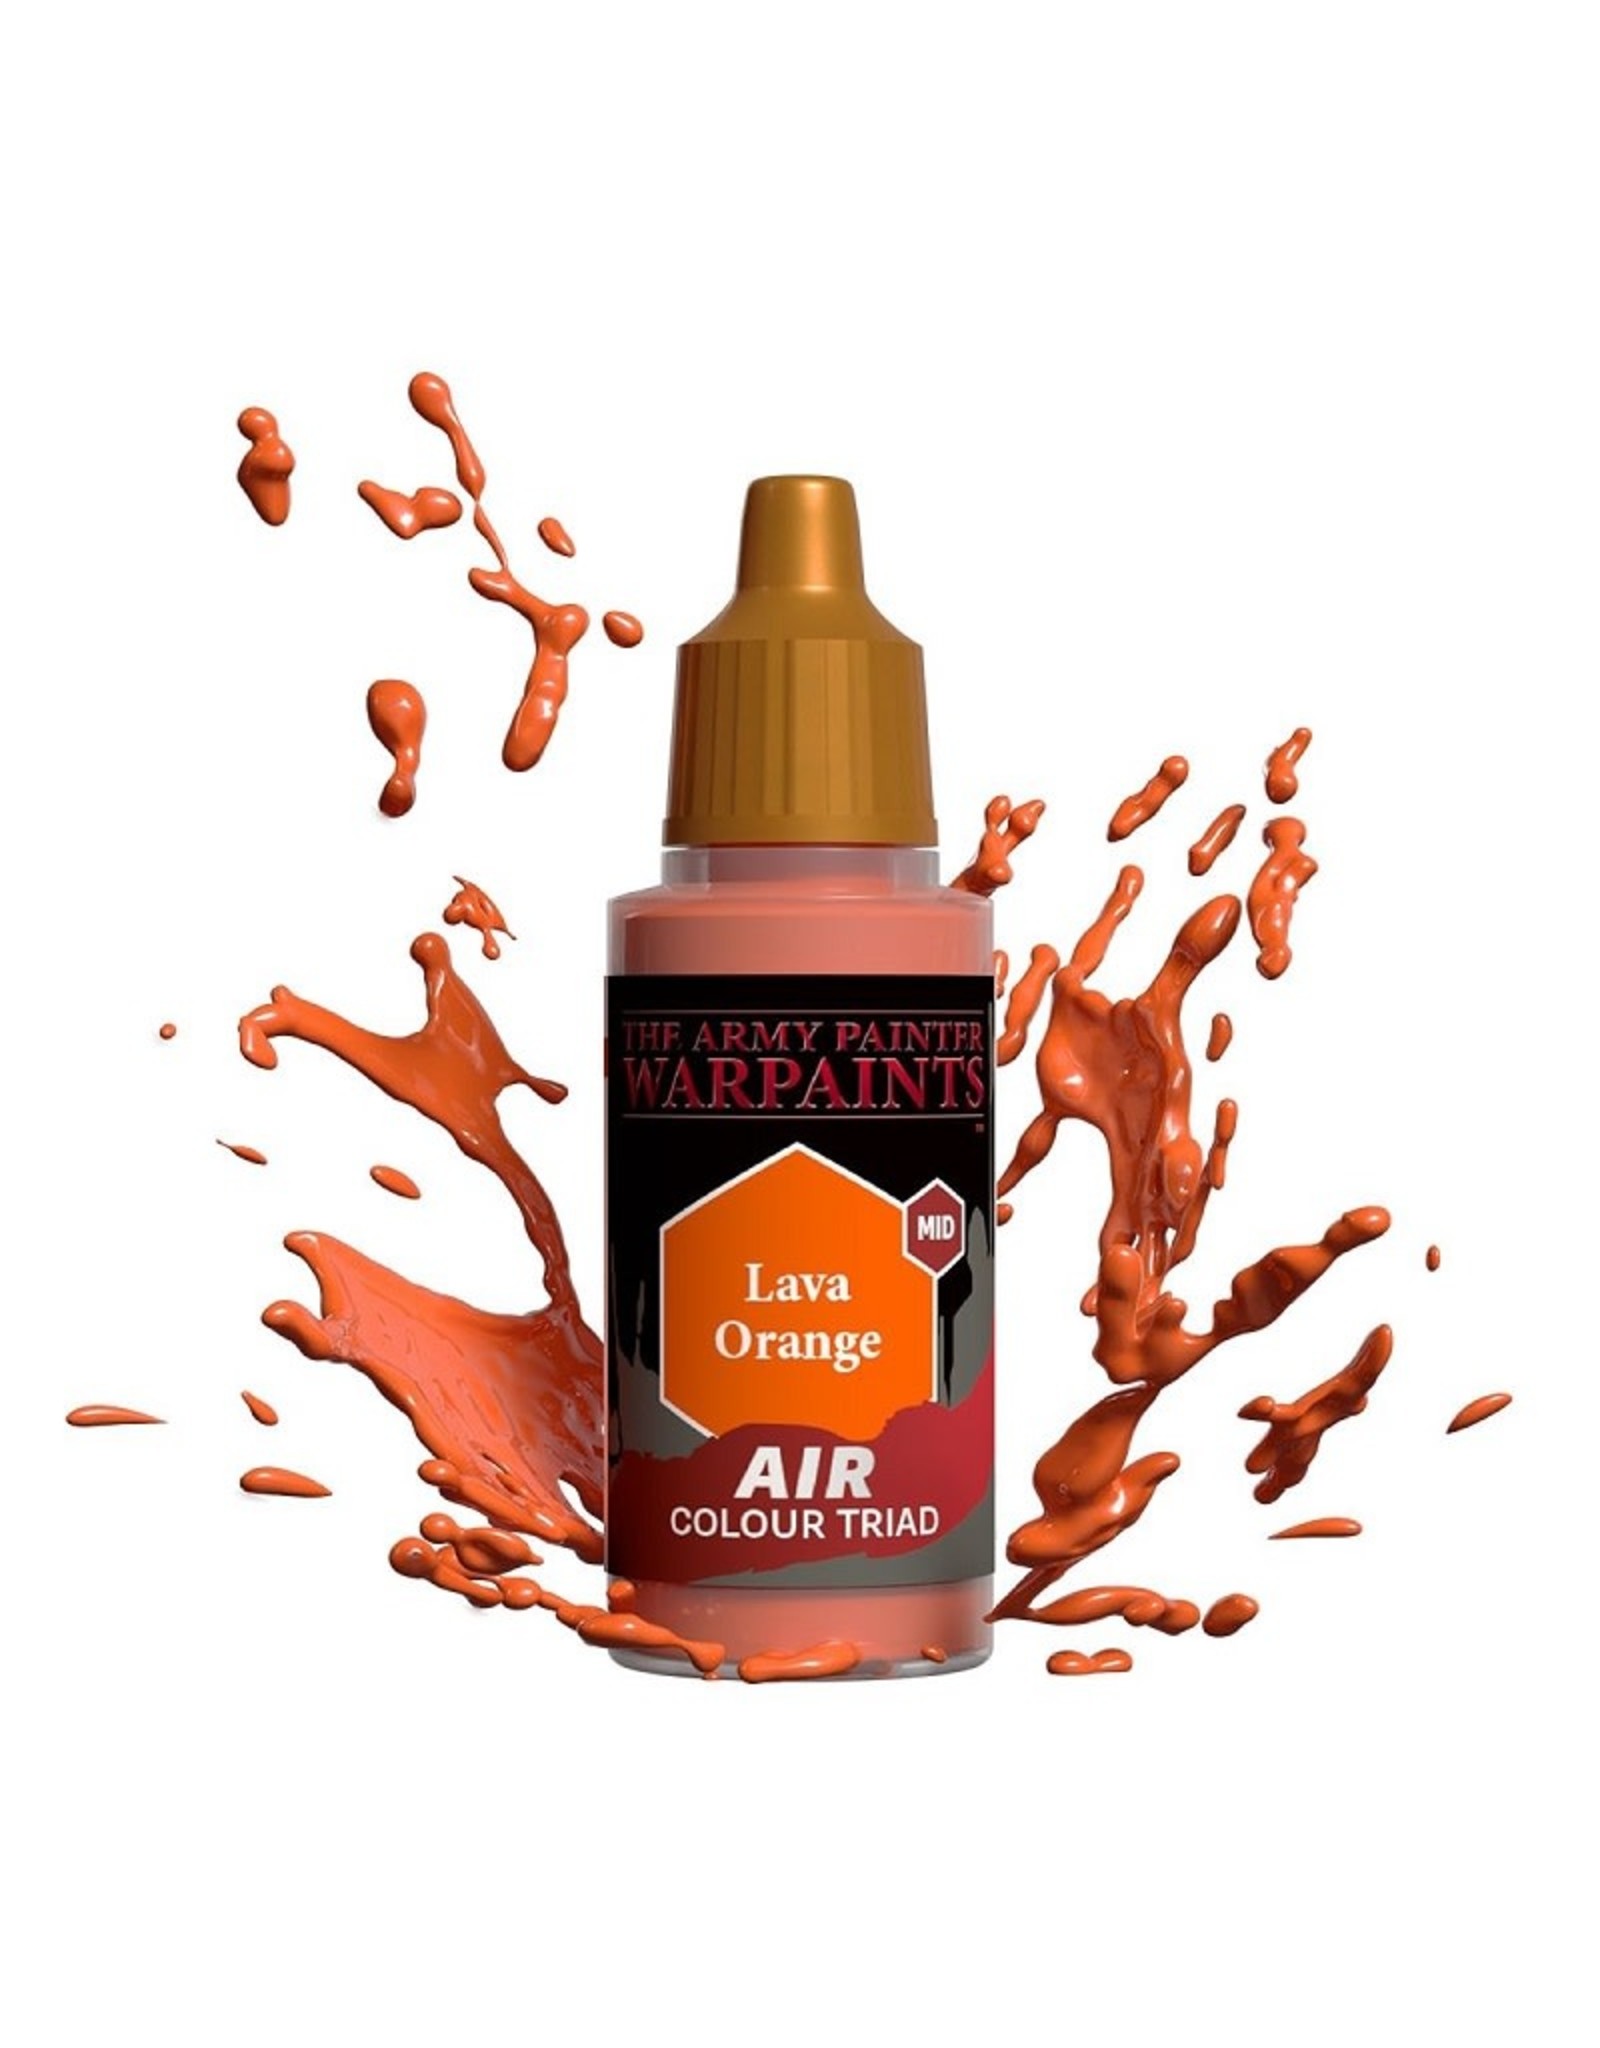 The Army Painter Warpaint Air: Lava Orange (18ml)